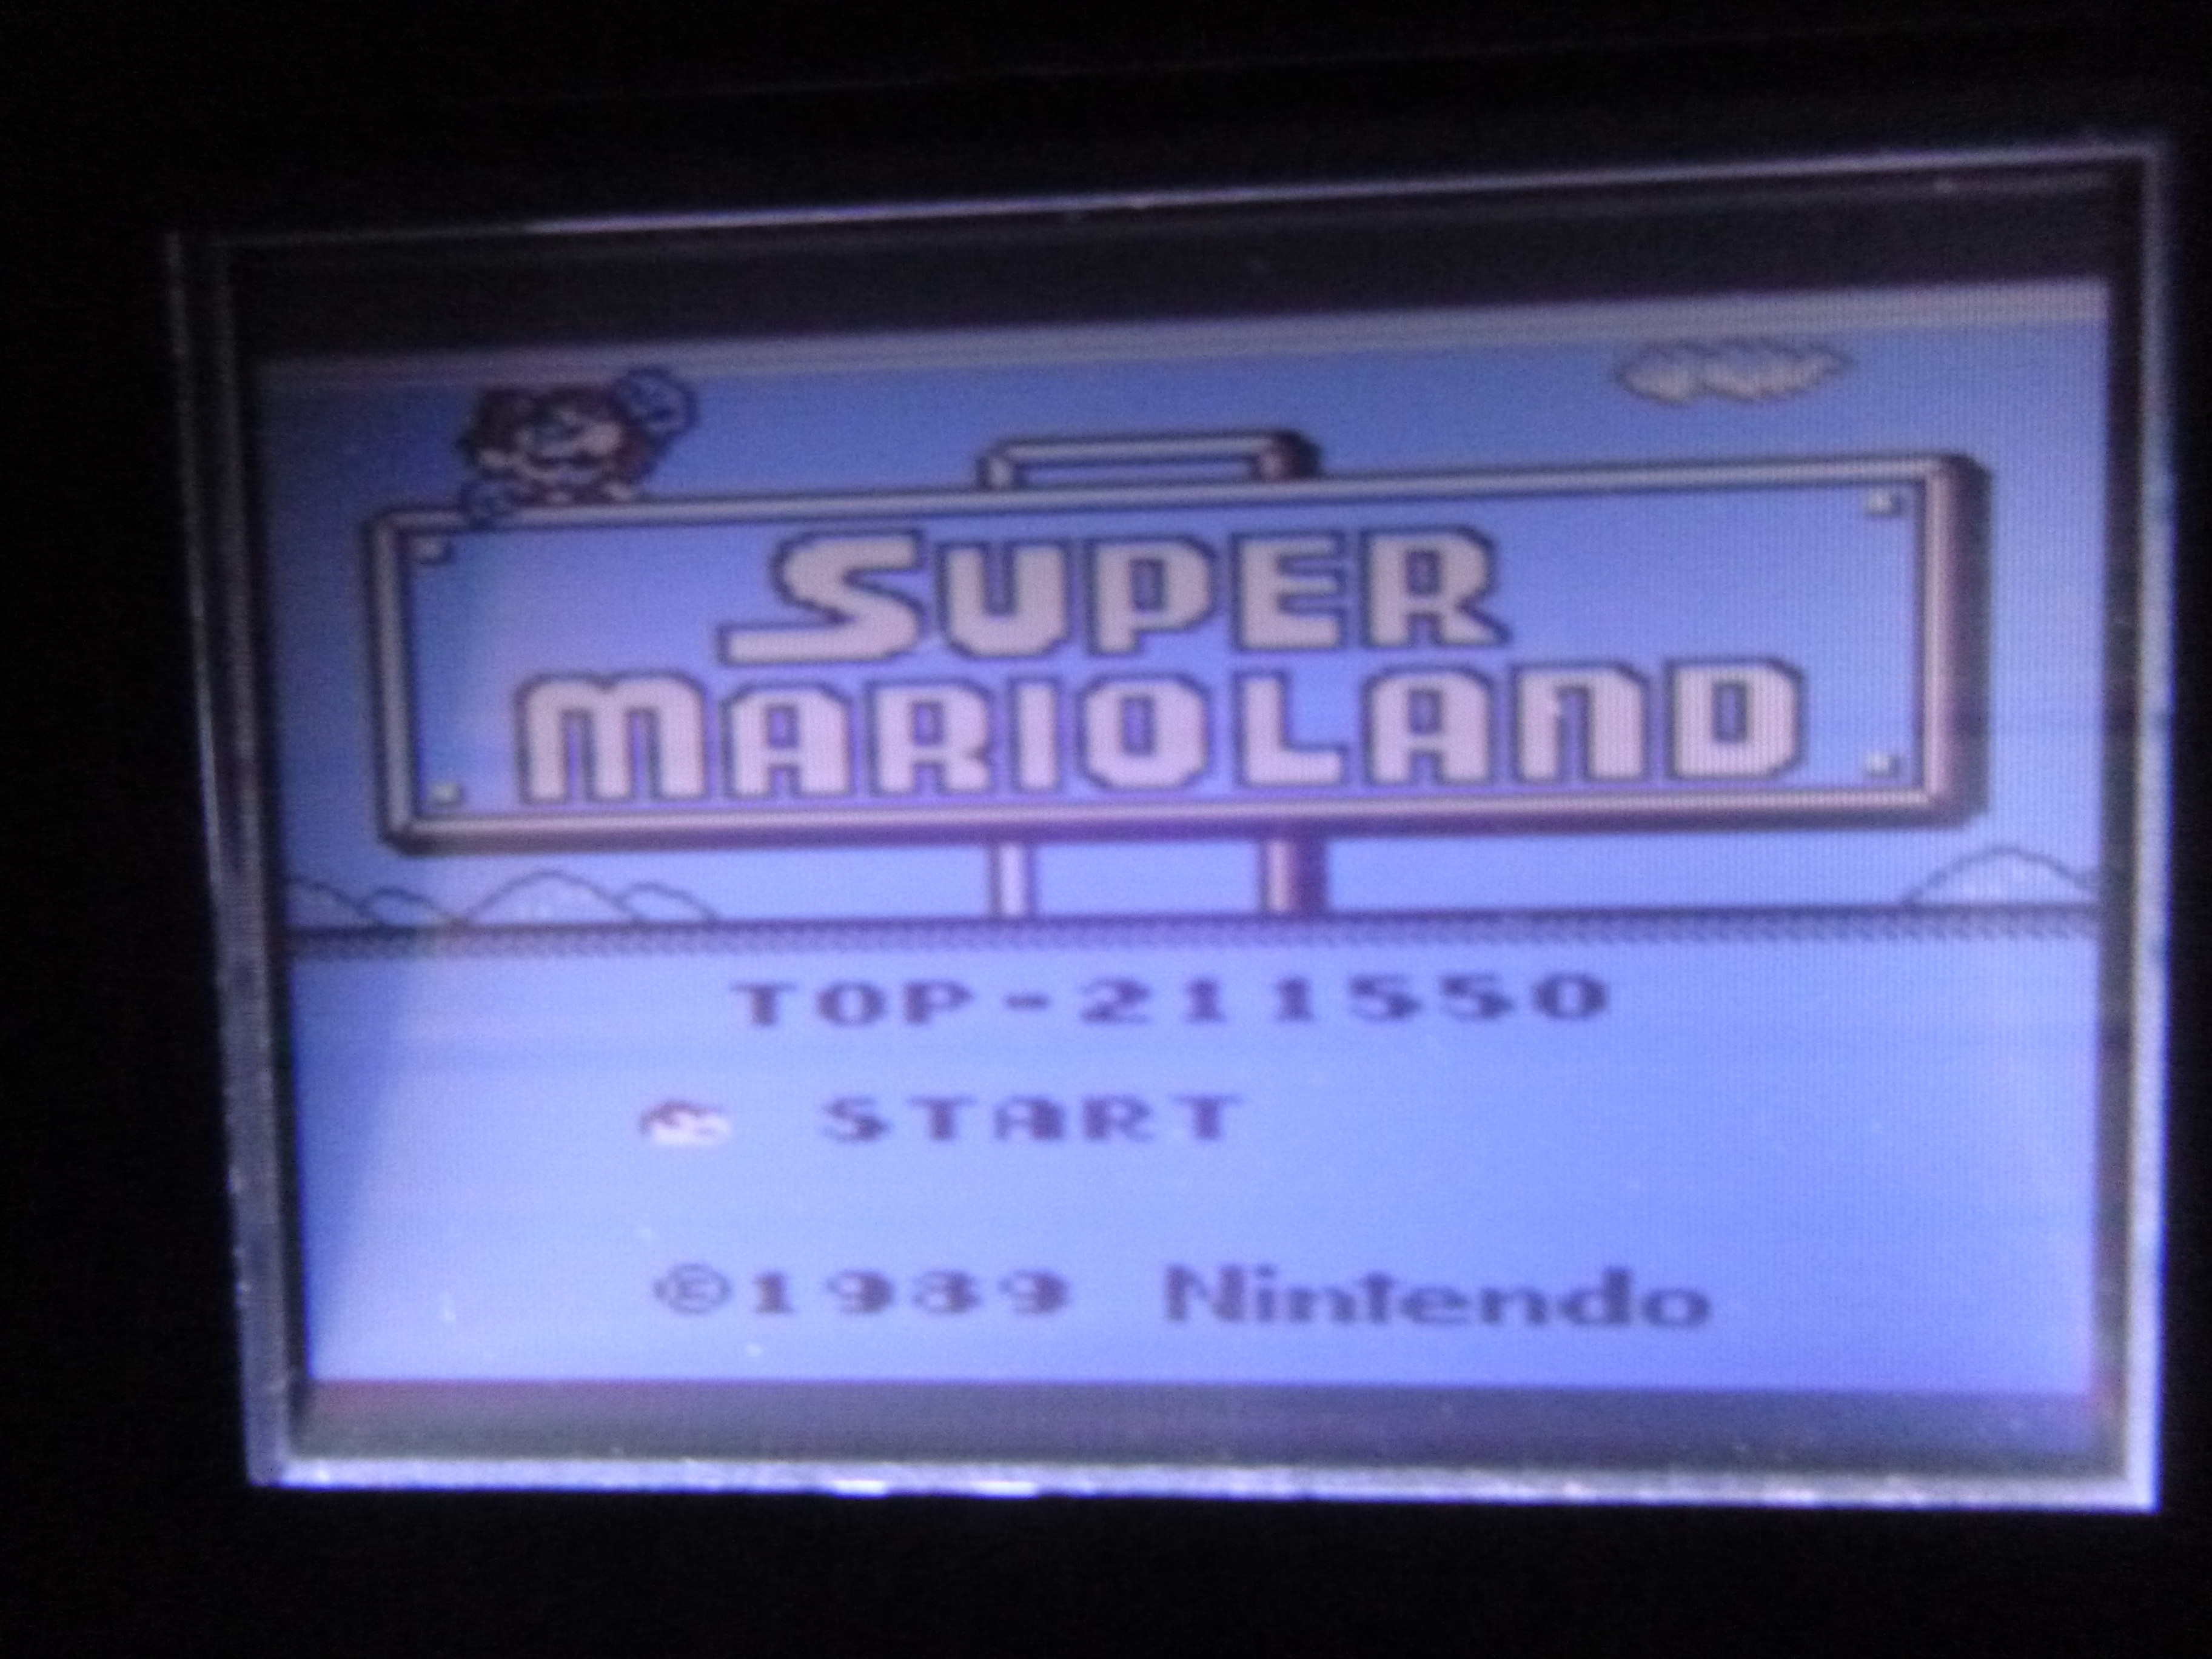 Super Mario Land 211,550 points